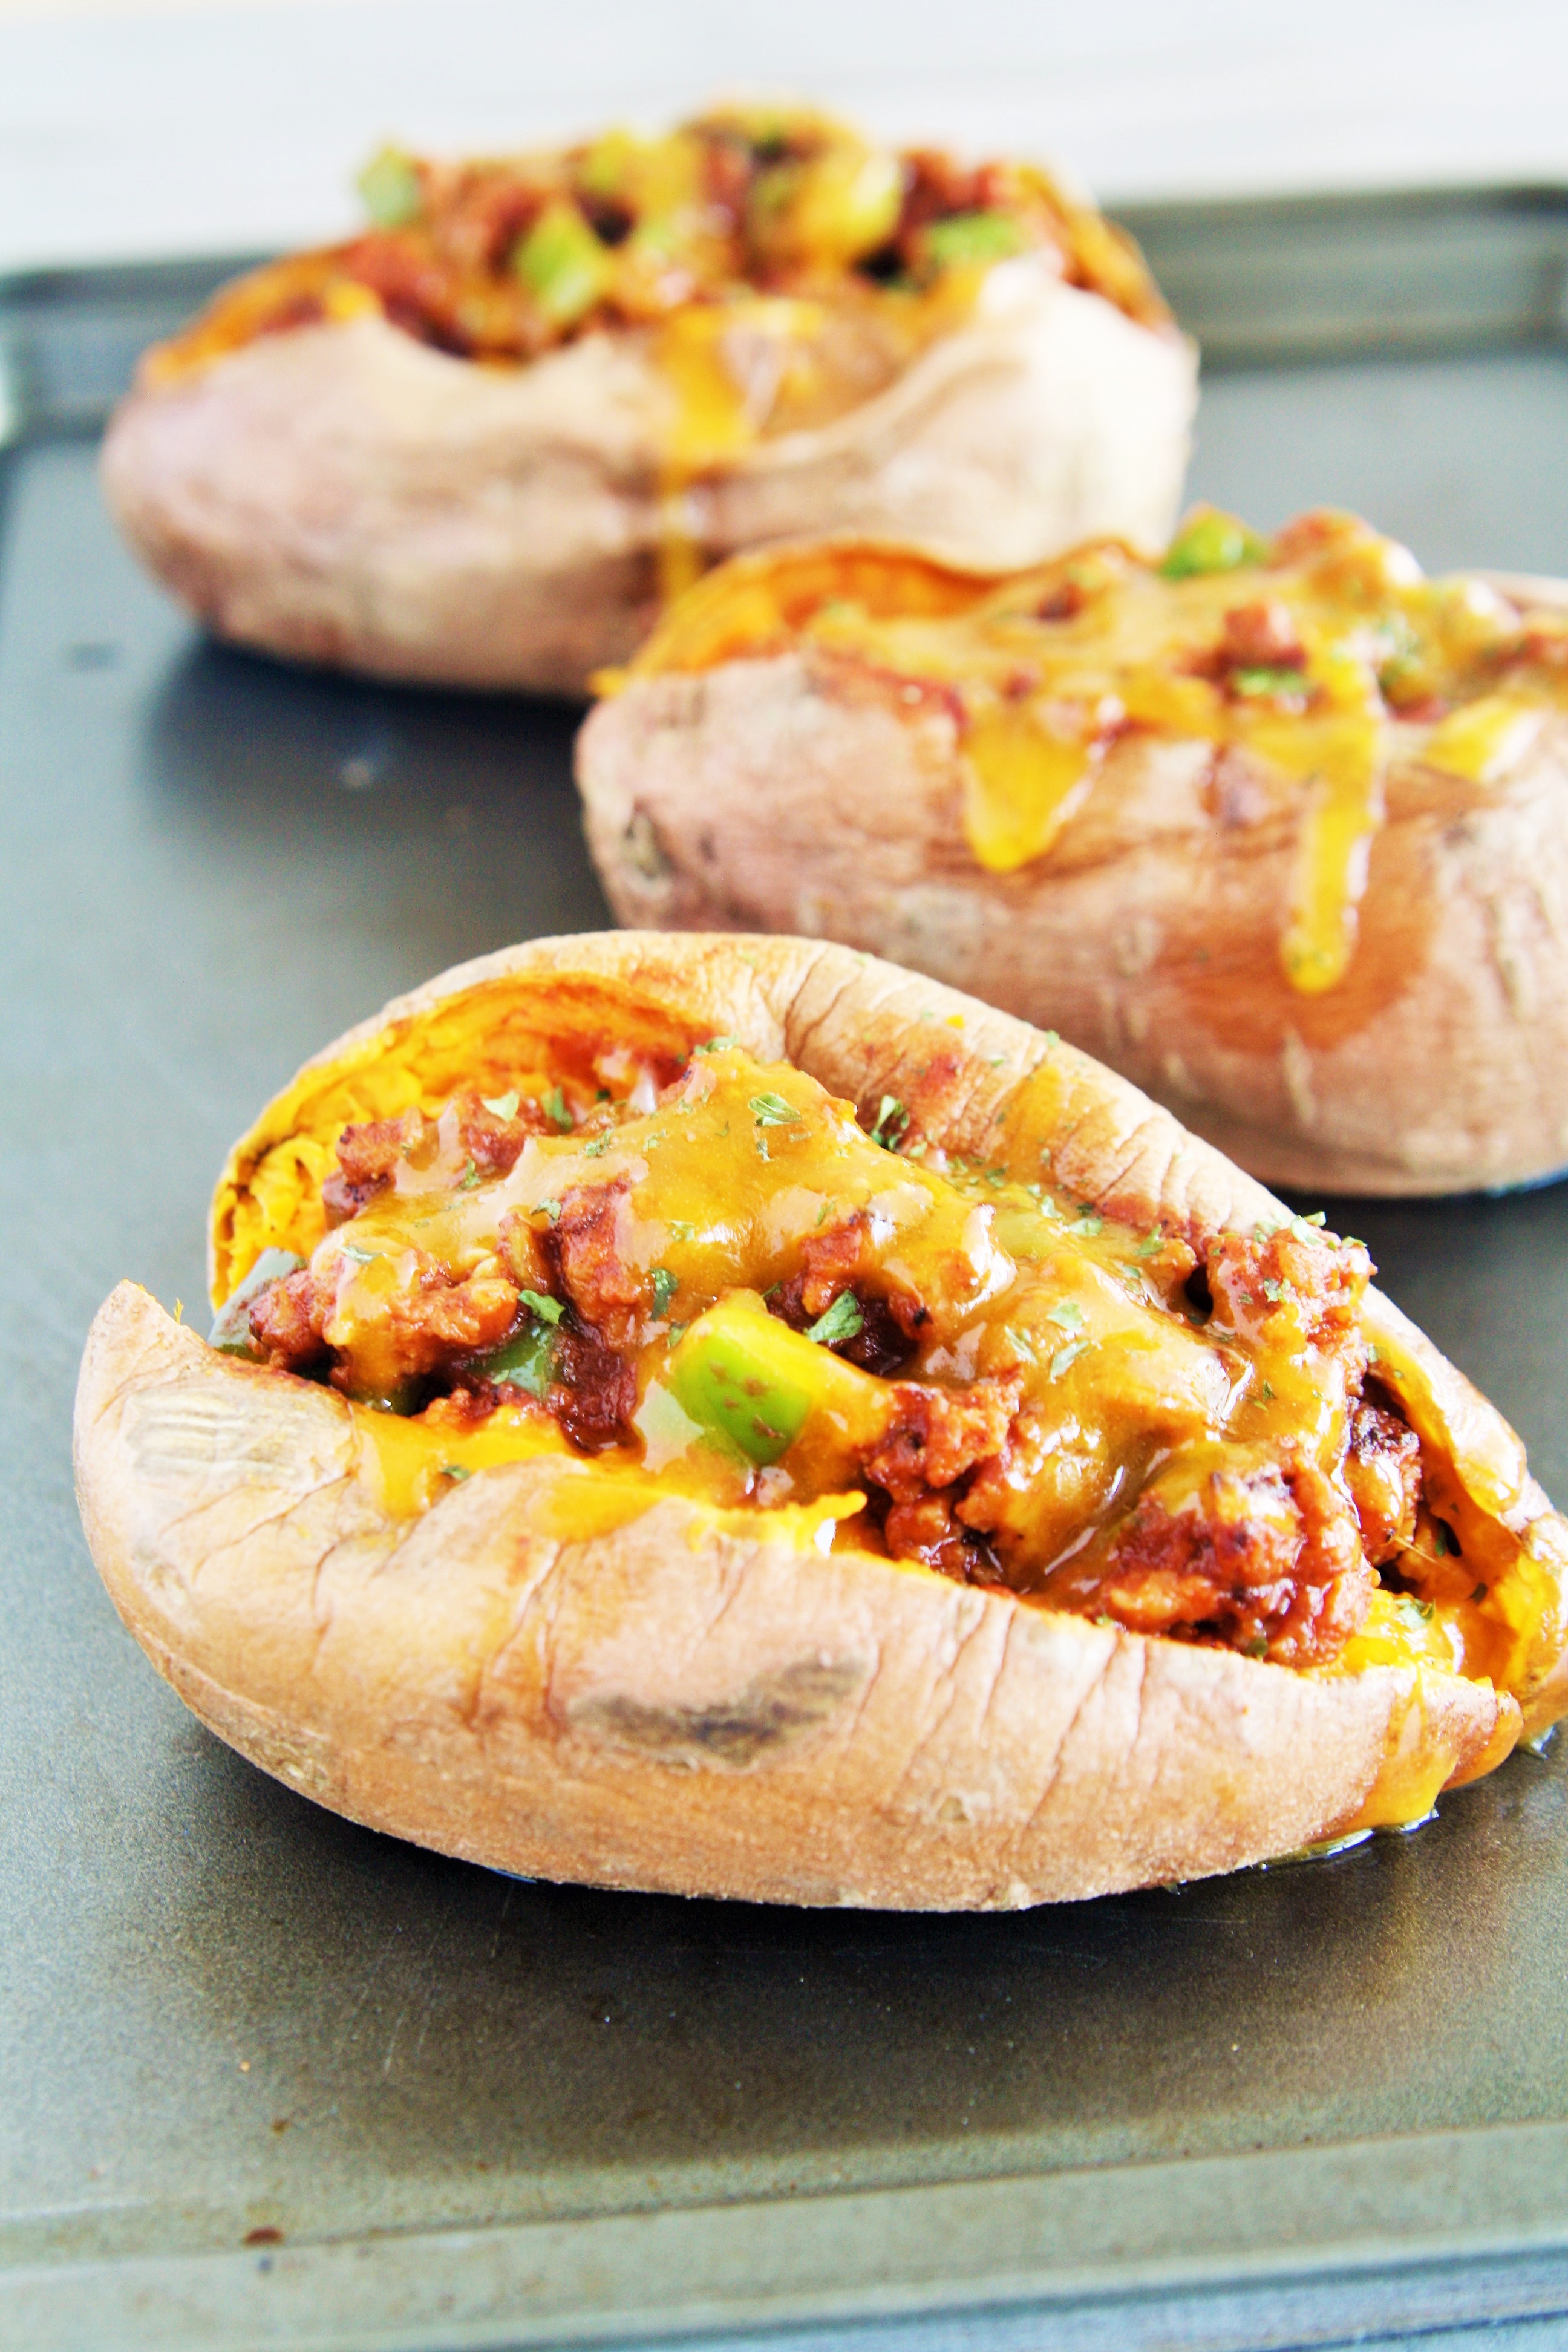 Chili Stuffed Sweet Potatoes - The Tasty Bite